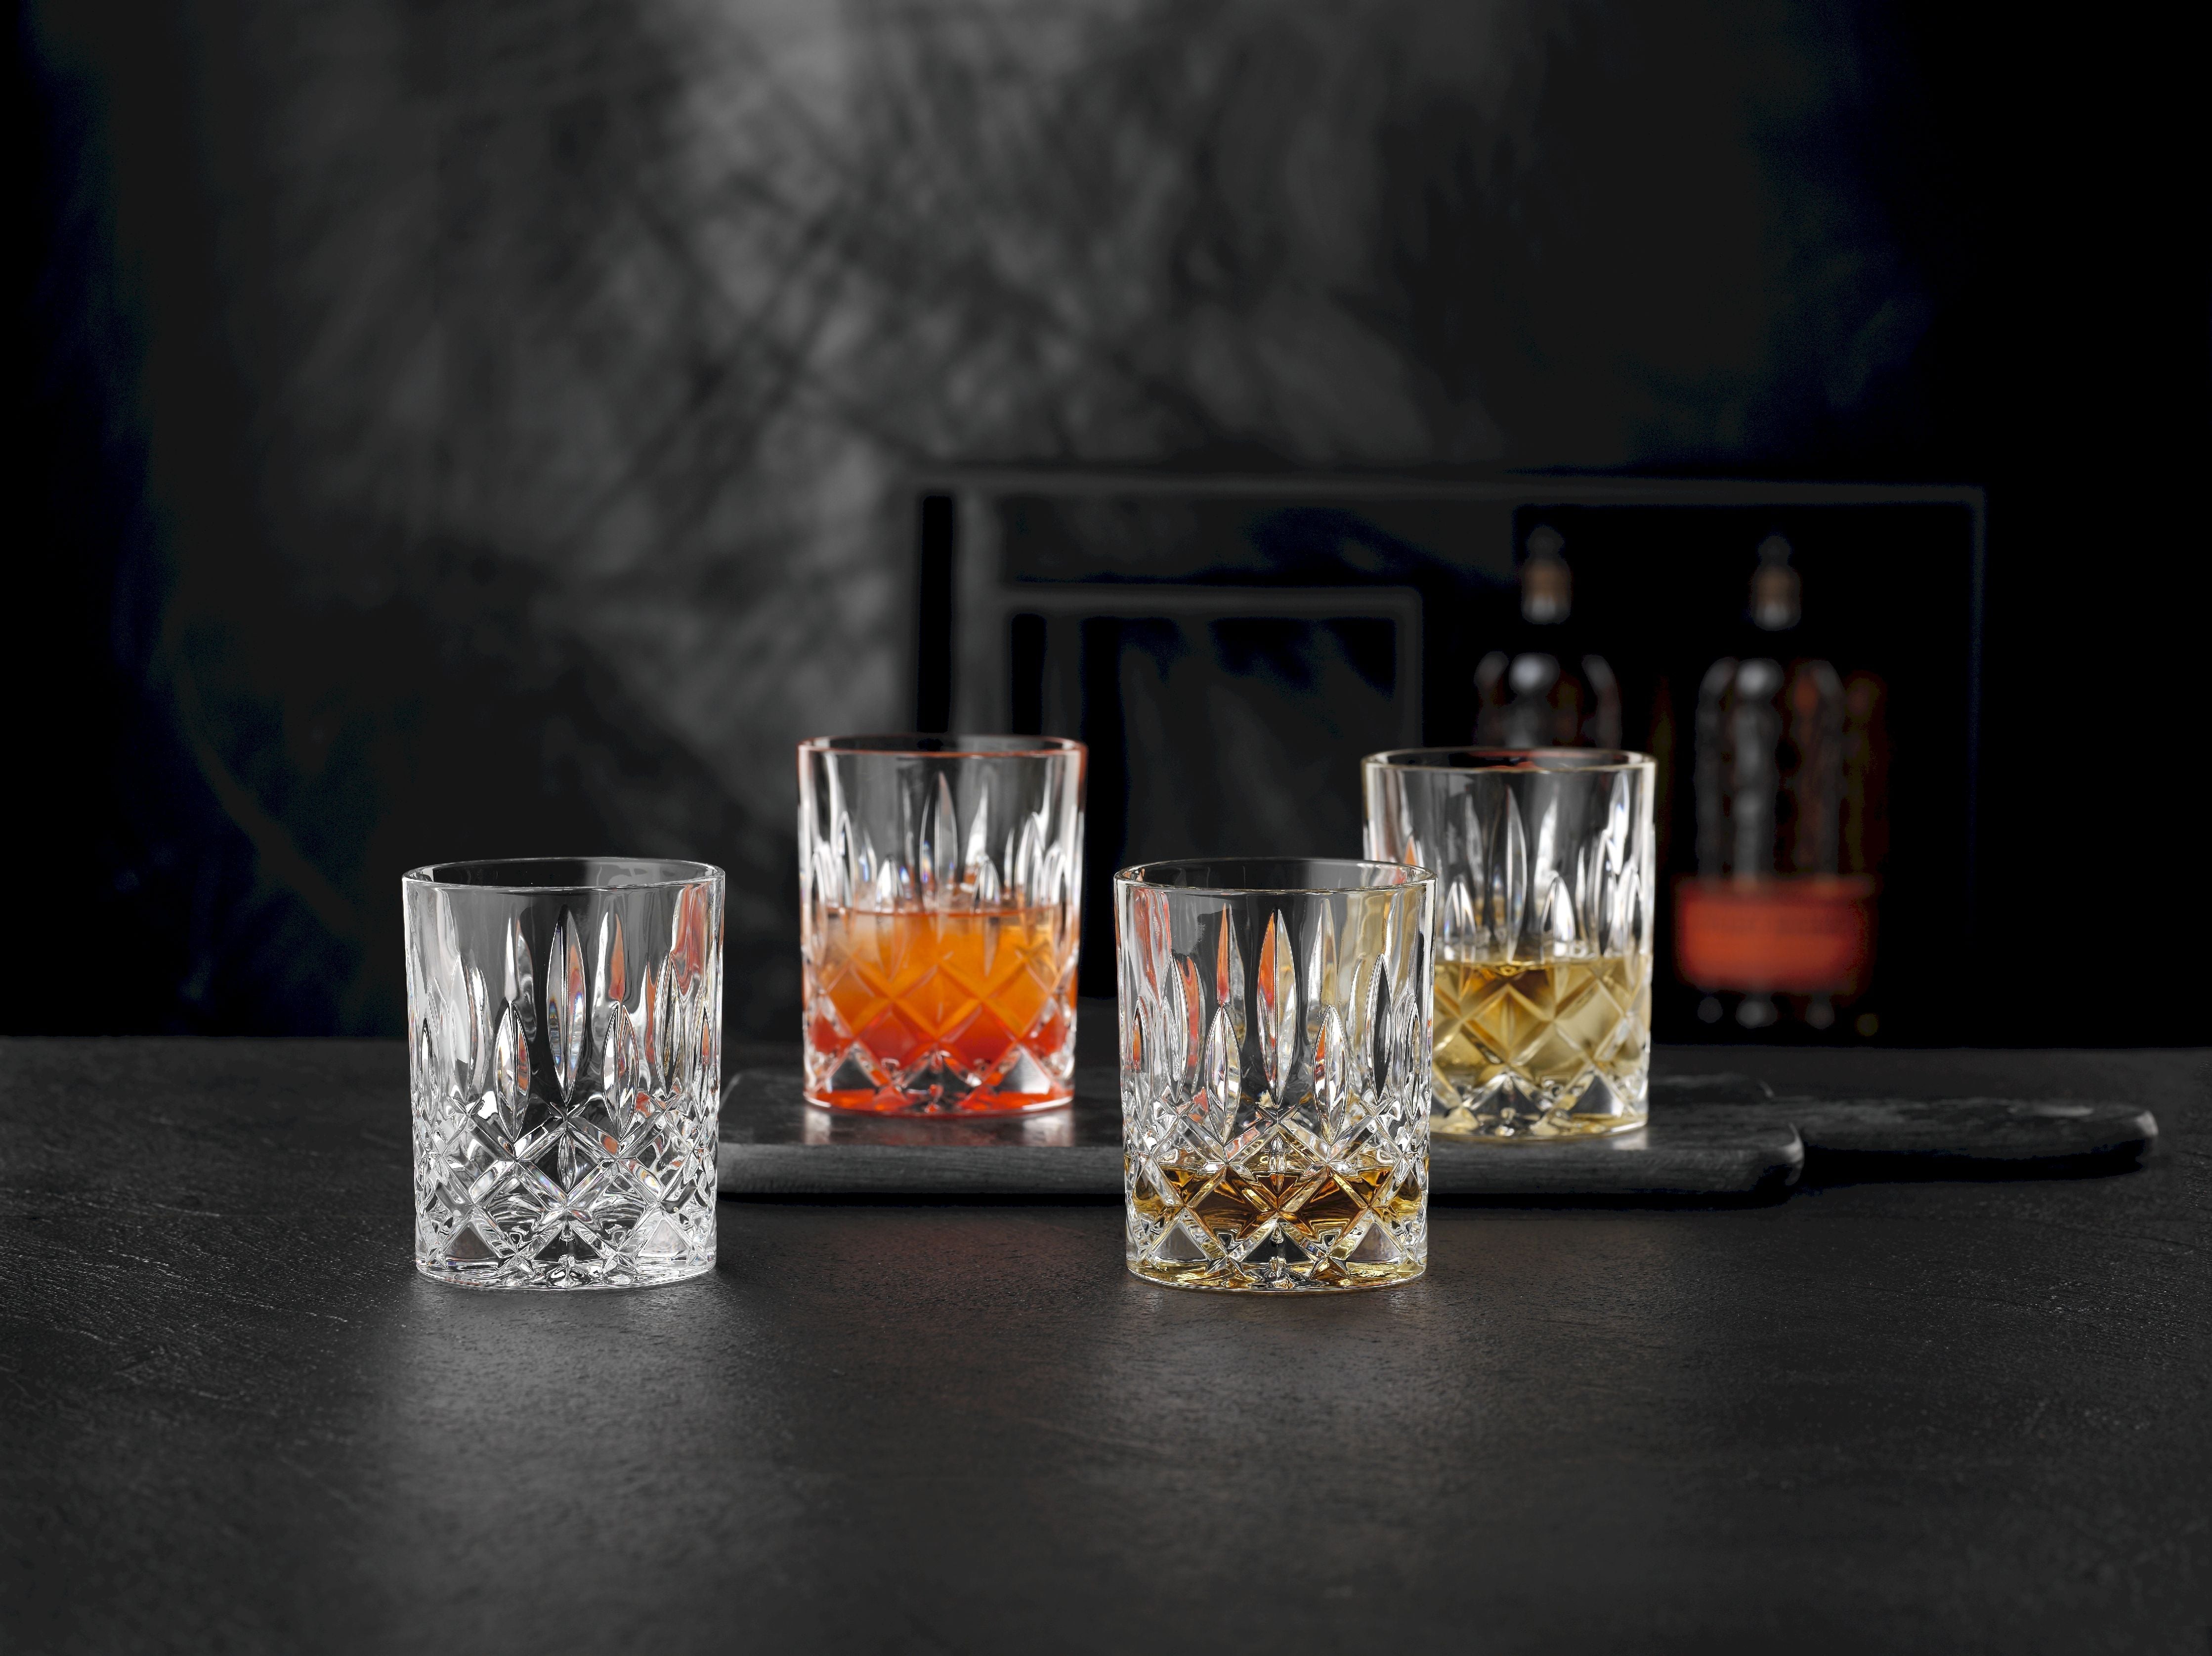 Nachtmann Noblesse Whisky Glass 295 ml, sett af 6